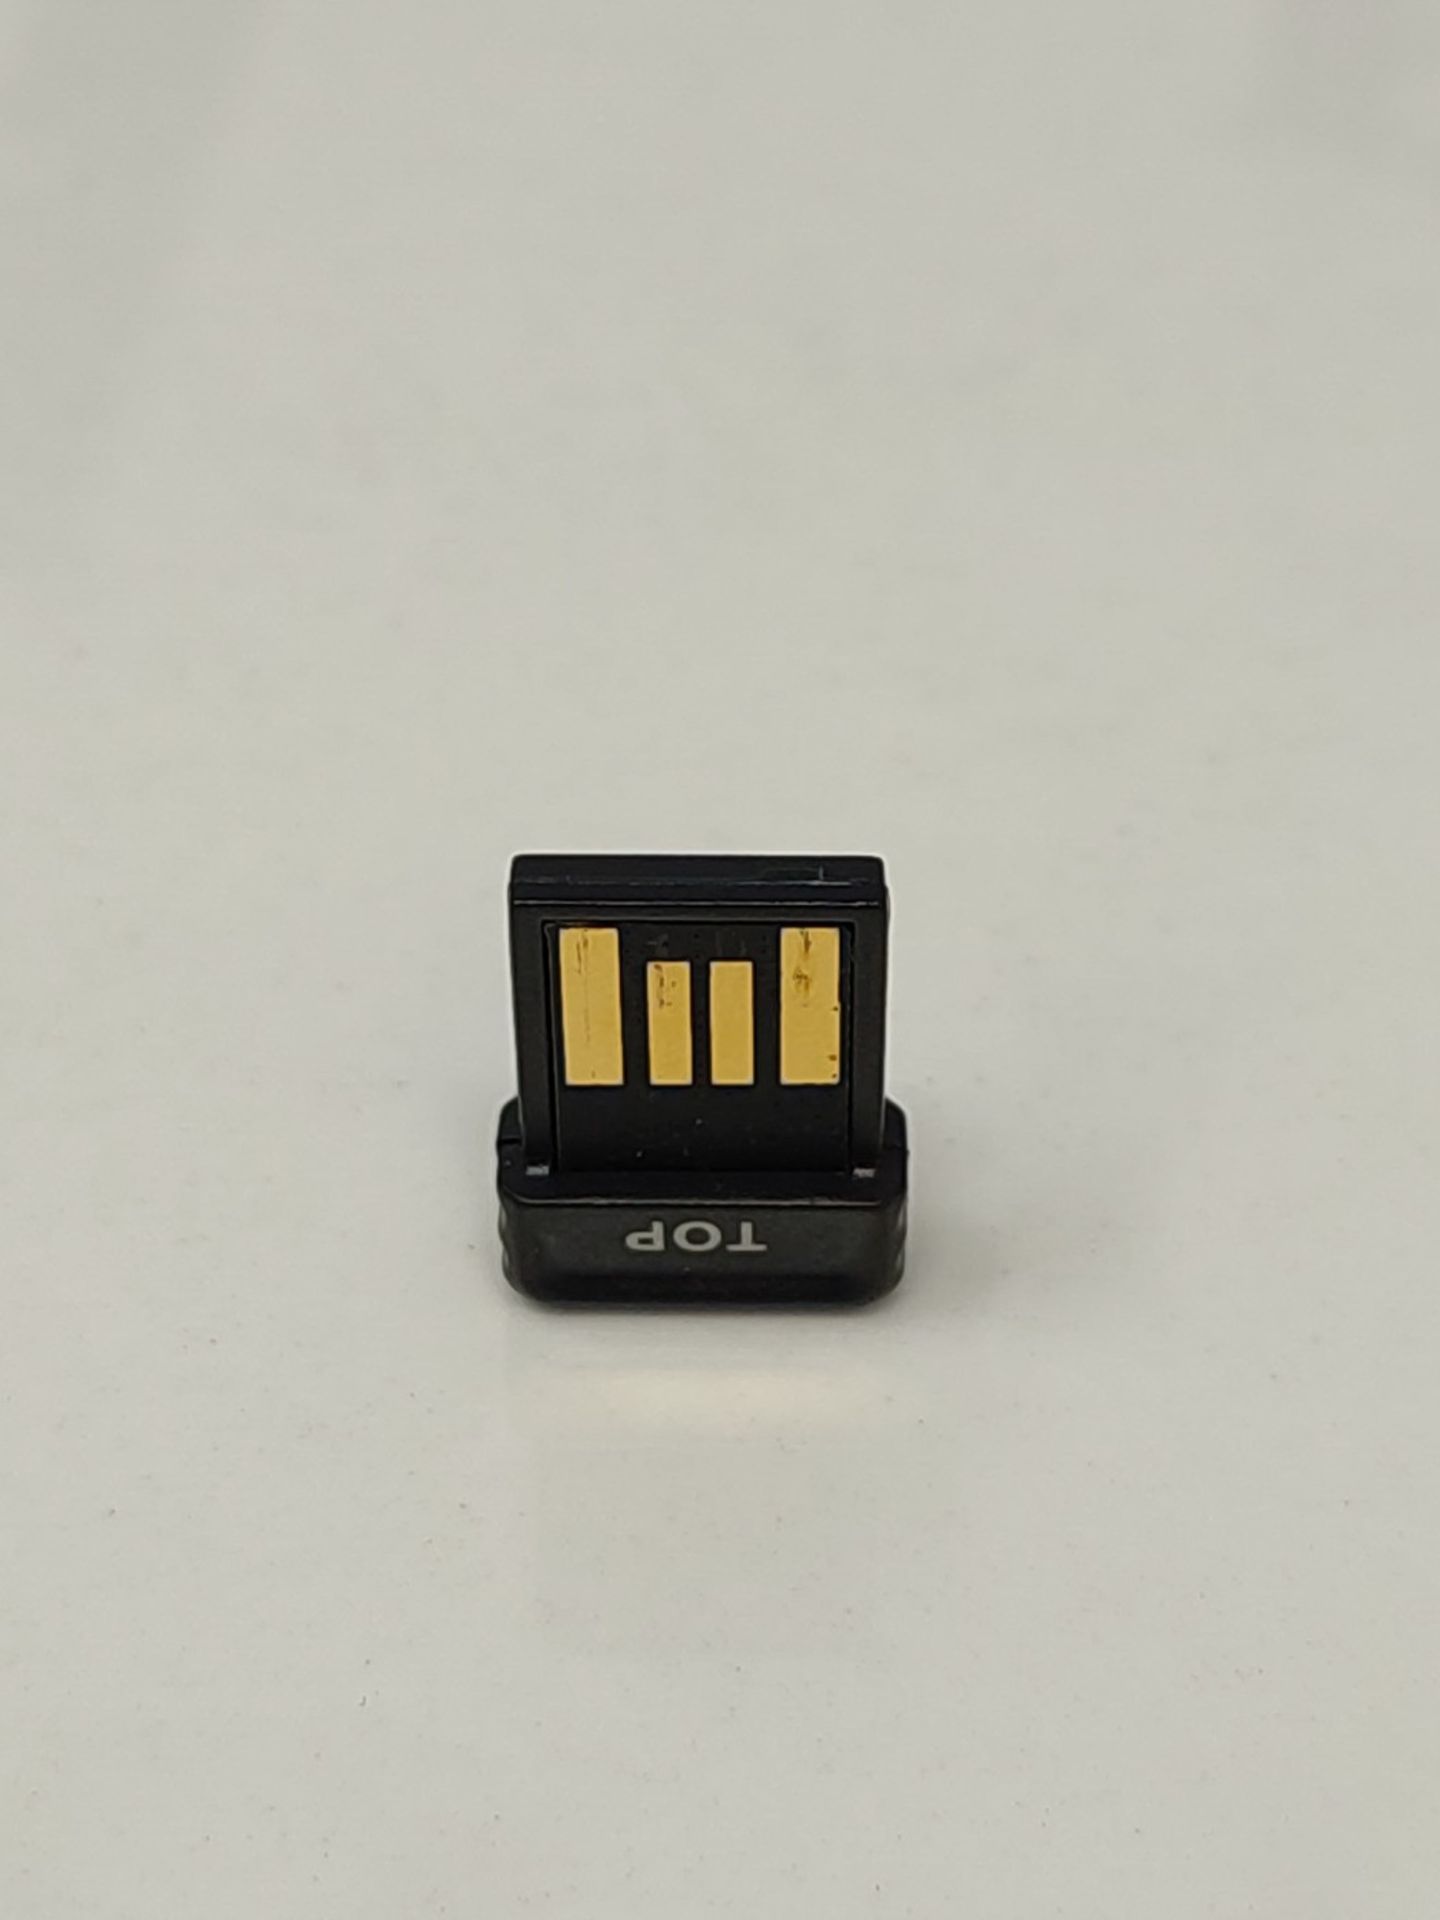 Yealink Bluetooth USB Dongle BT41 Bluetooth Adapter. - Image 2 of 3